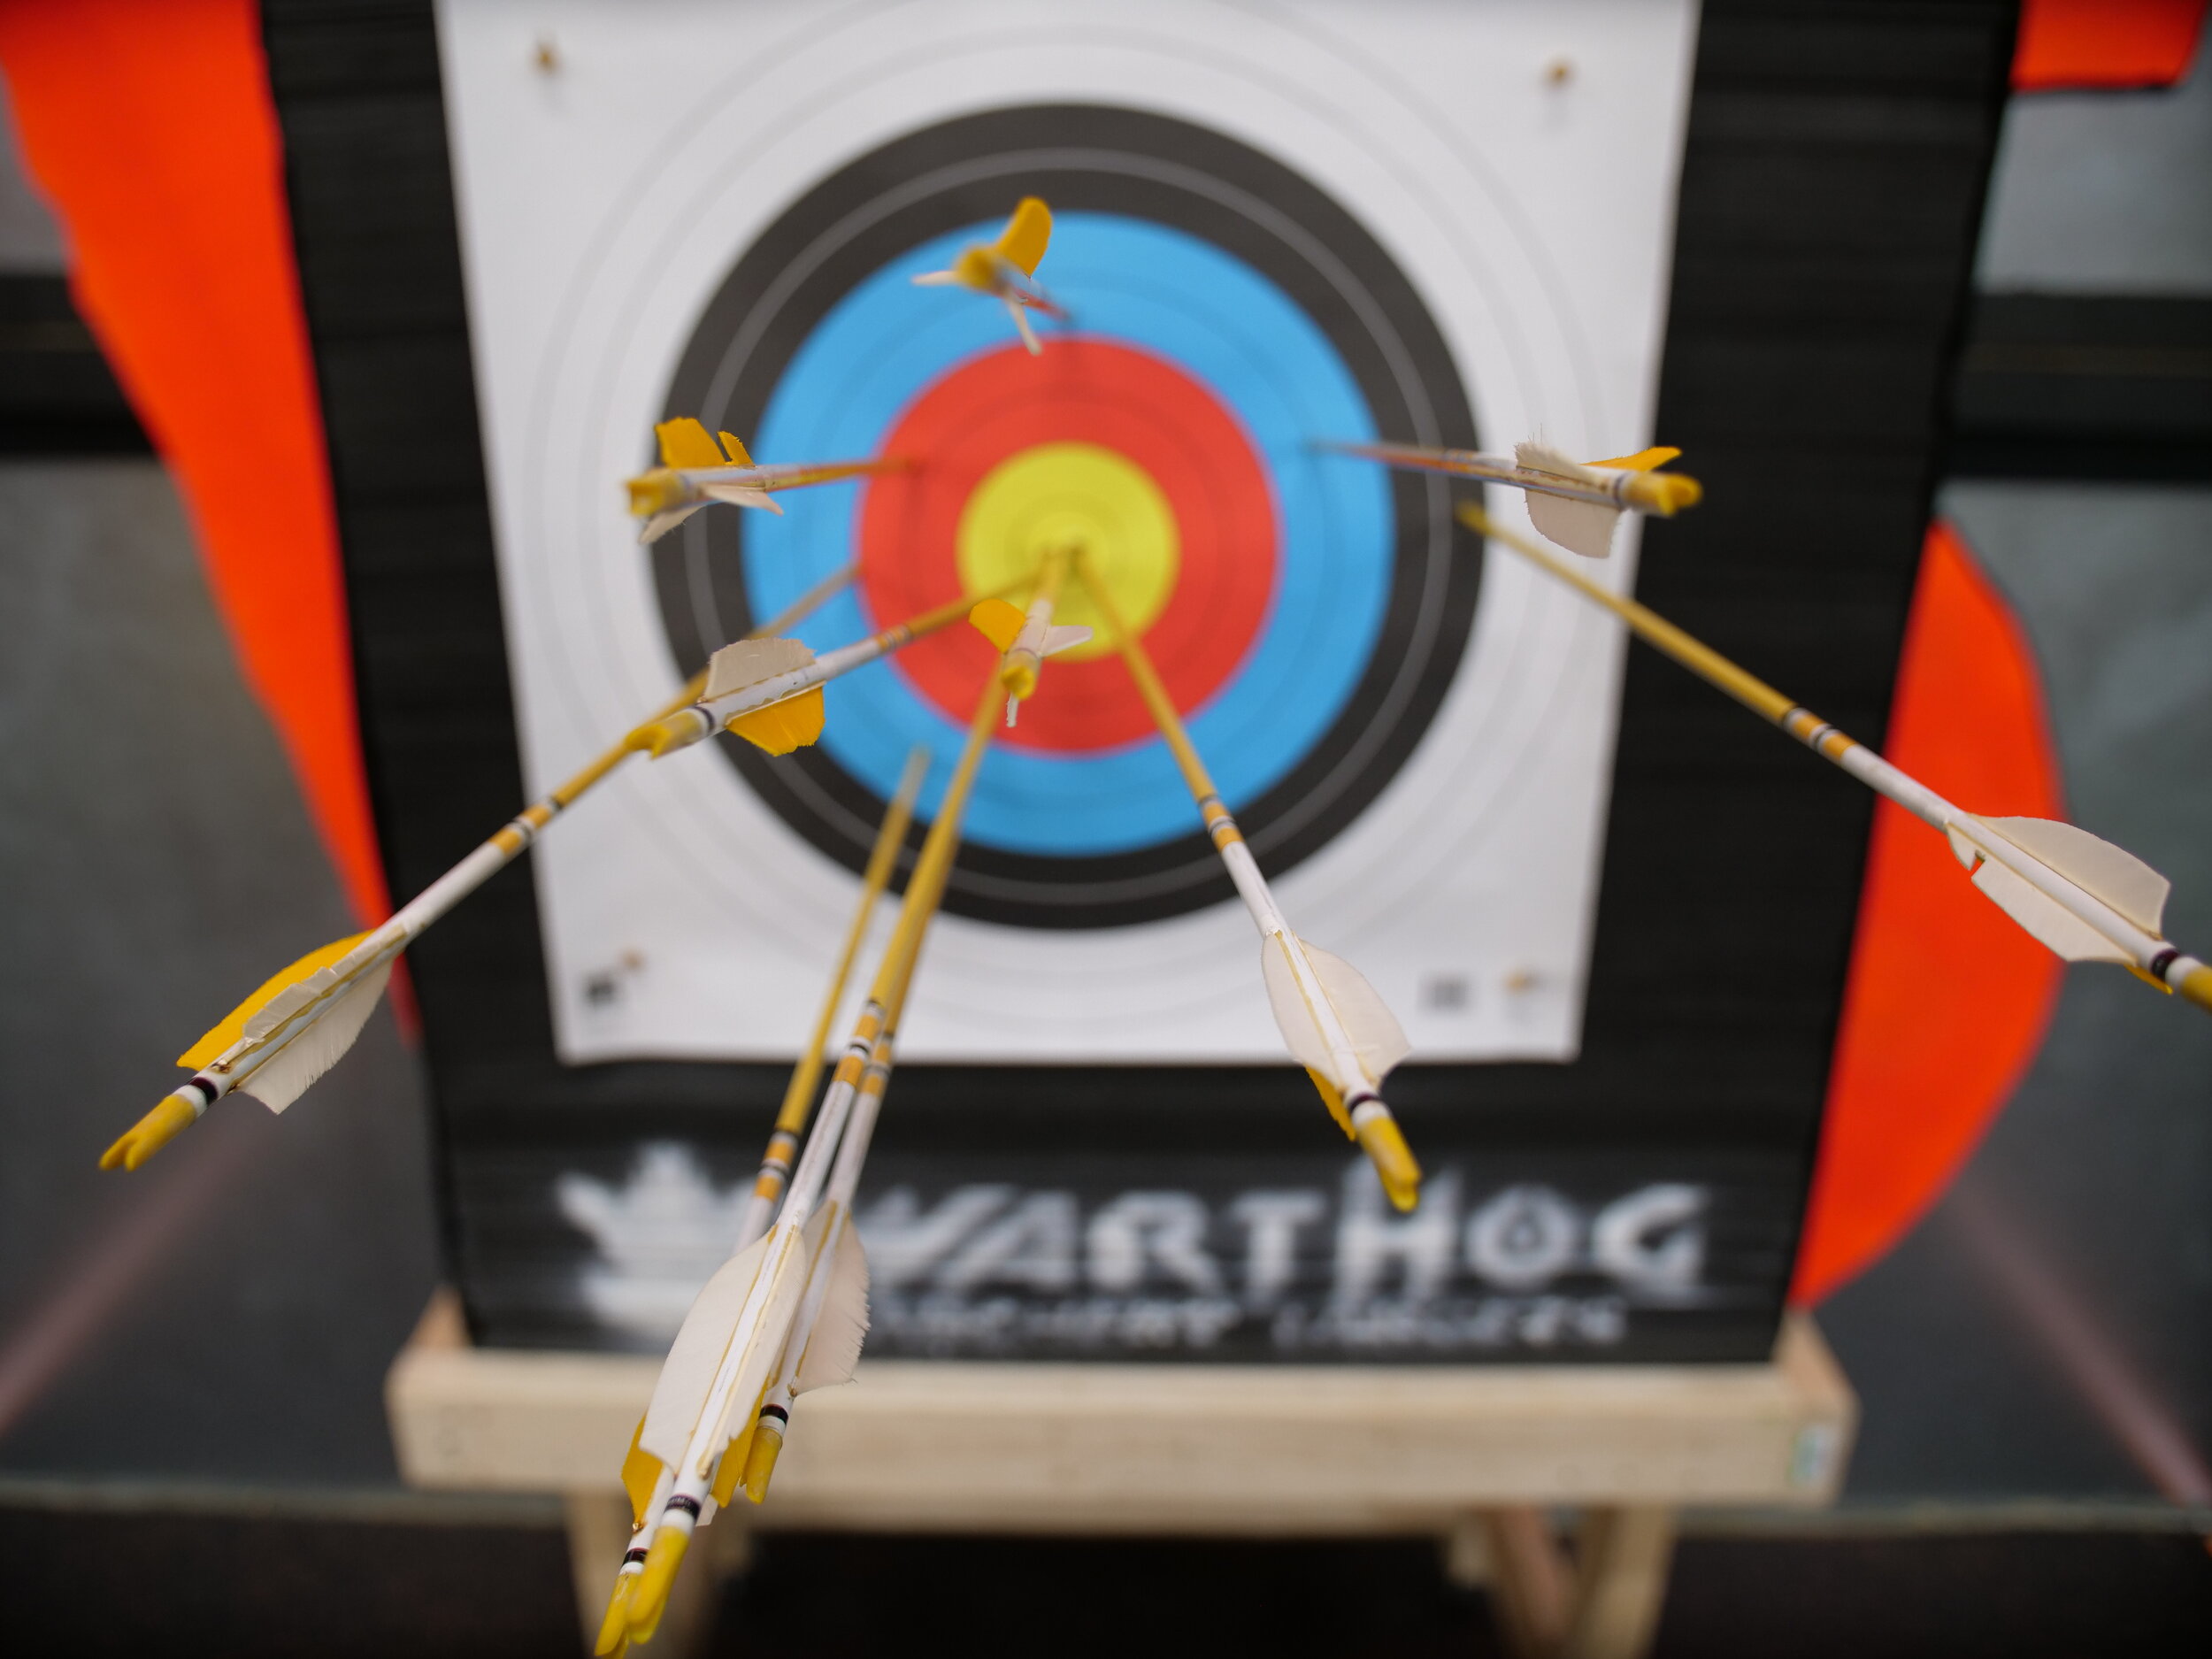 Archer Archery Toronto Target Archery Archery Range.JPG